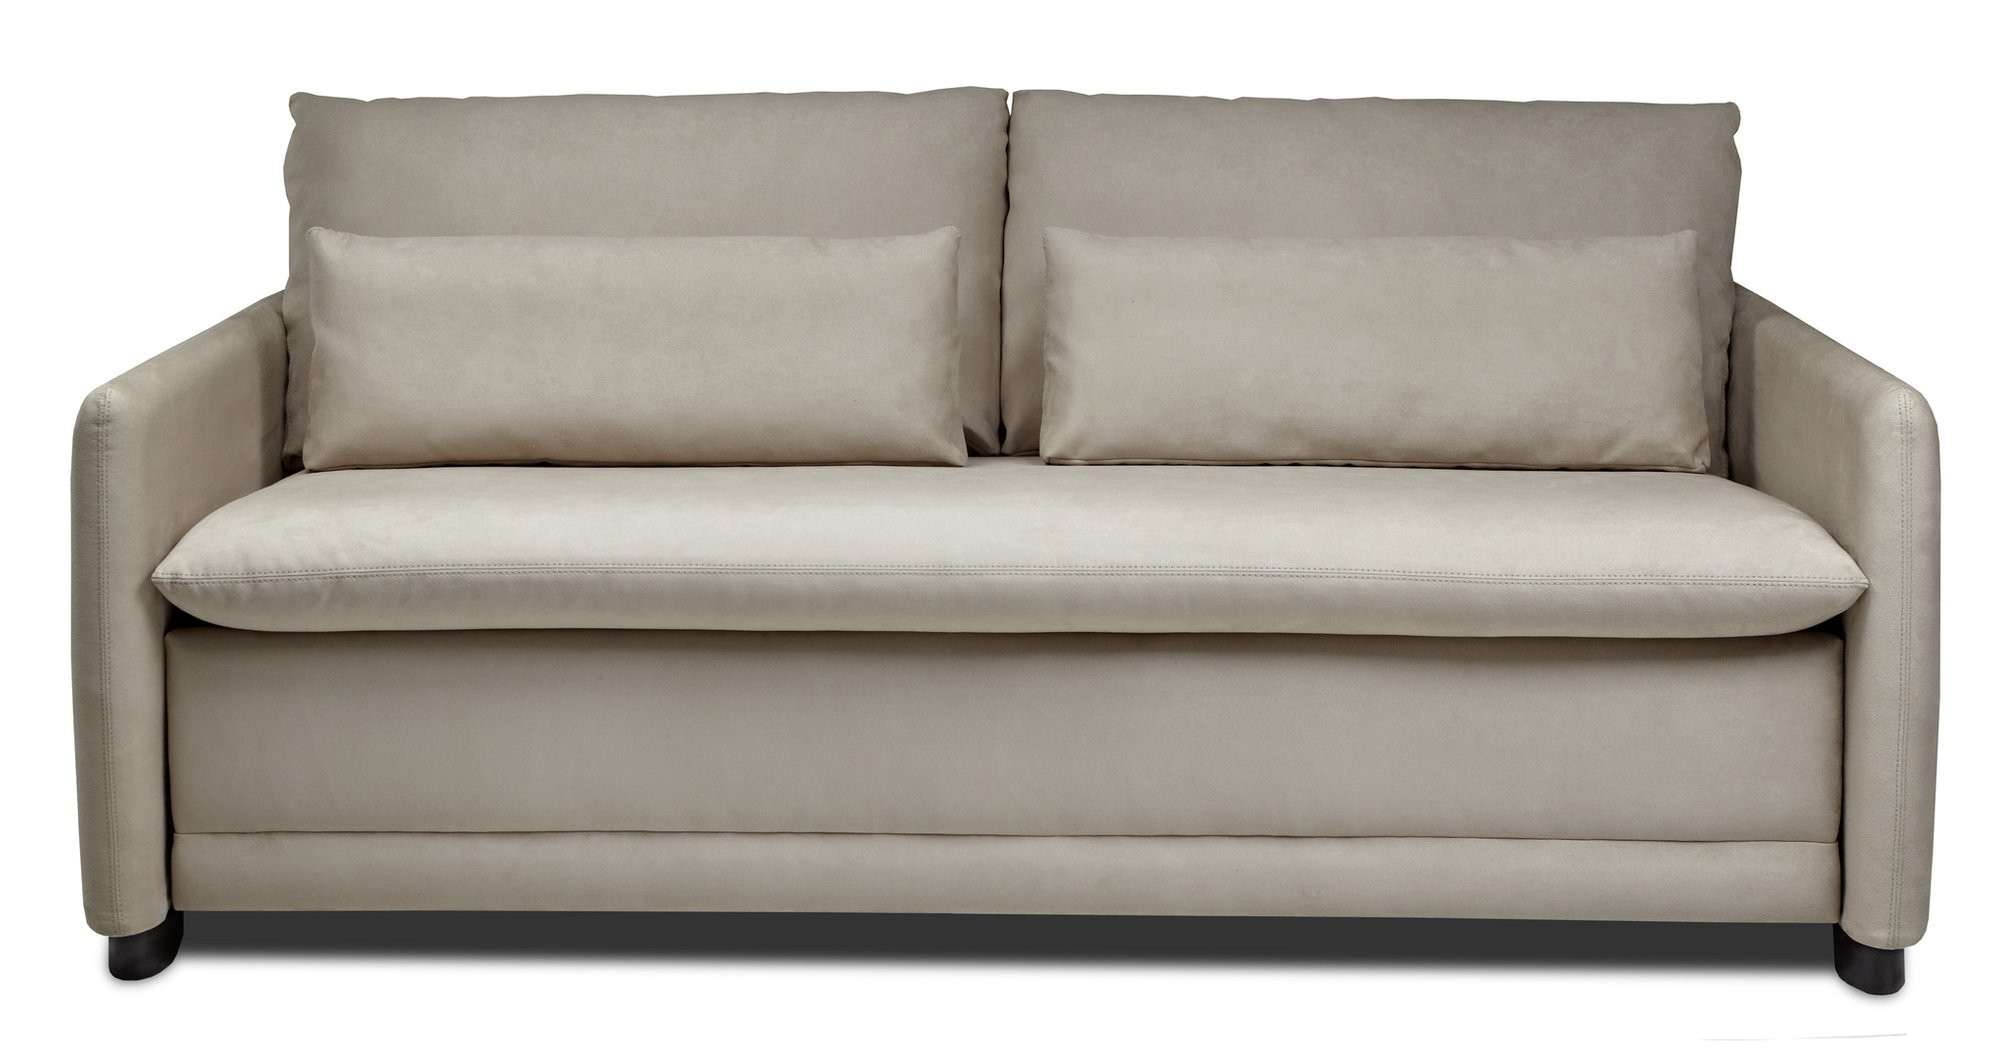 Best ideas about Tempur Pedic Sleeper Sofa
. Save or Pin Furniture fy Design Tempurpedic Sleeper Sofa For Now.